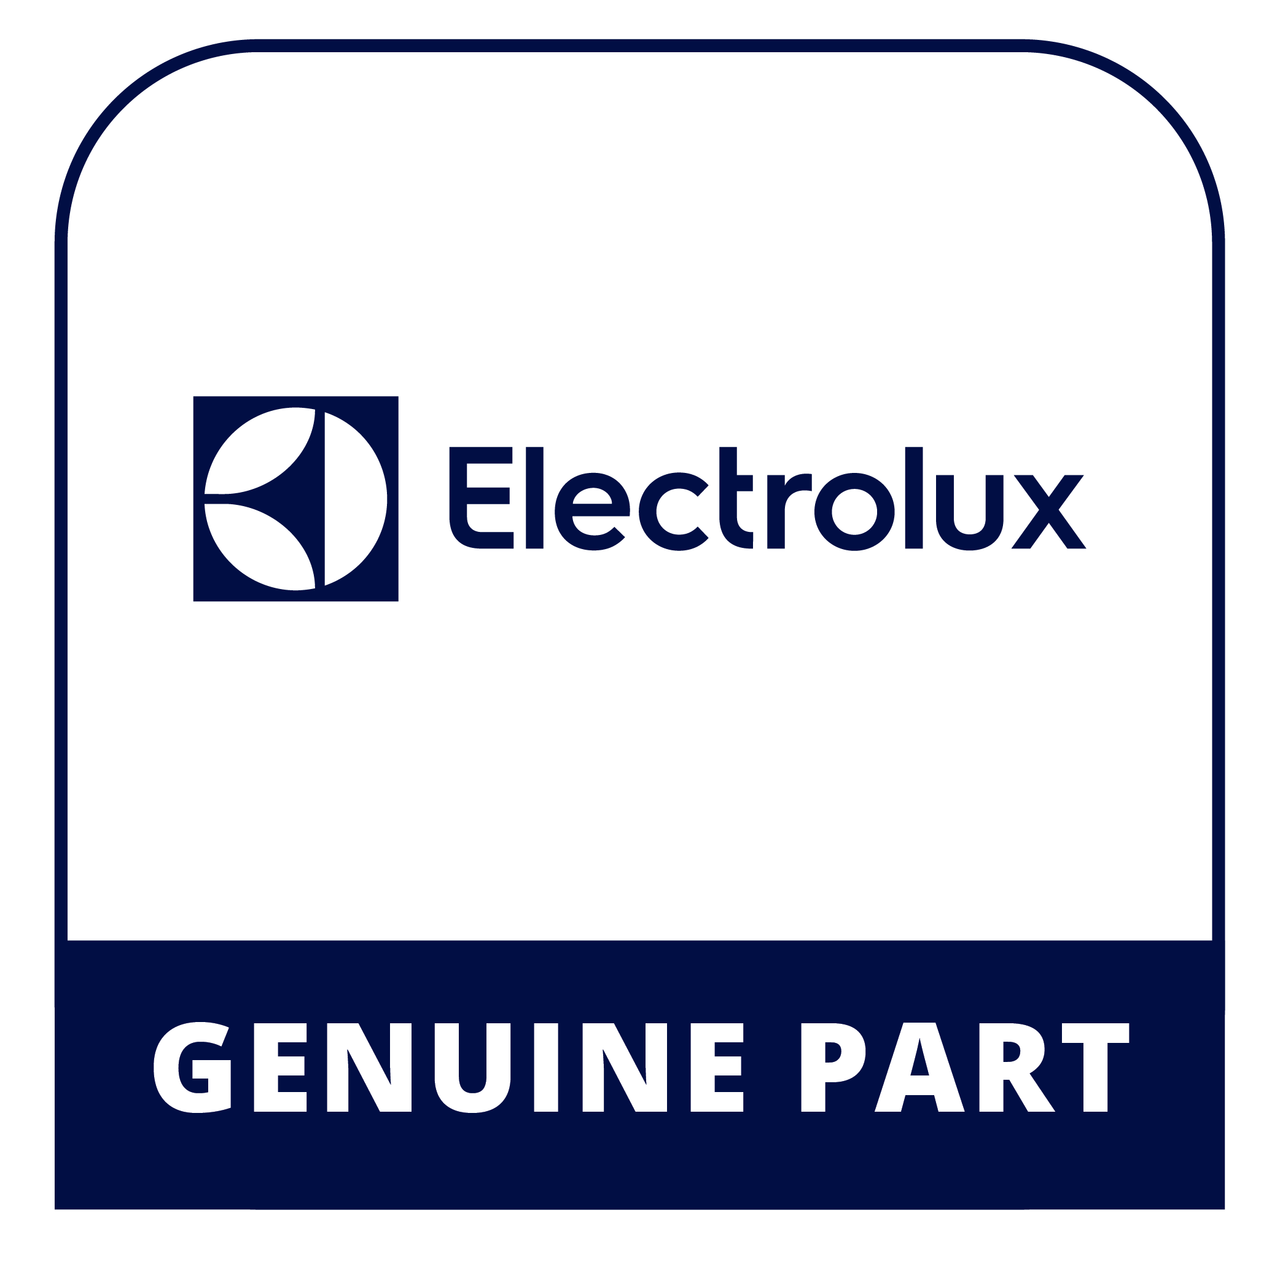 Frigidaire - Electrolux 5304501679 Control Panel Assem - Genuine Electrolux Part